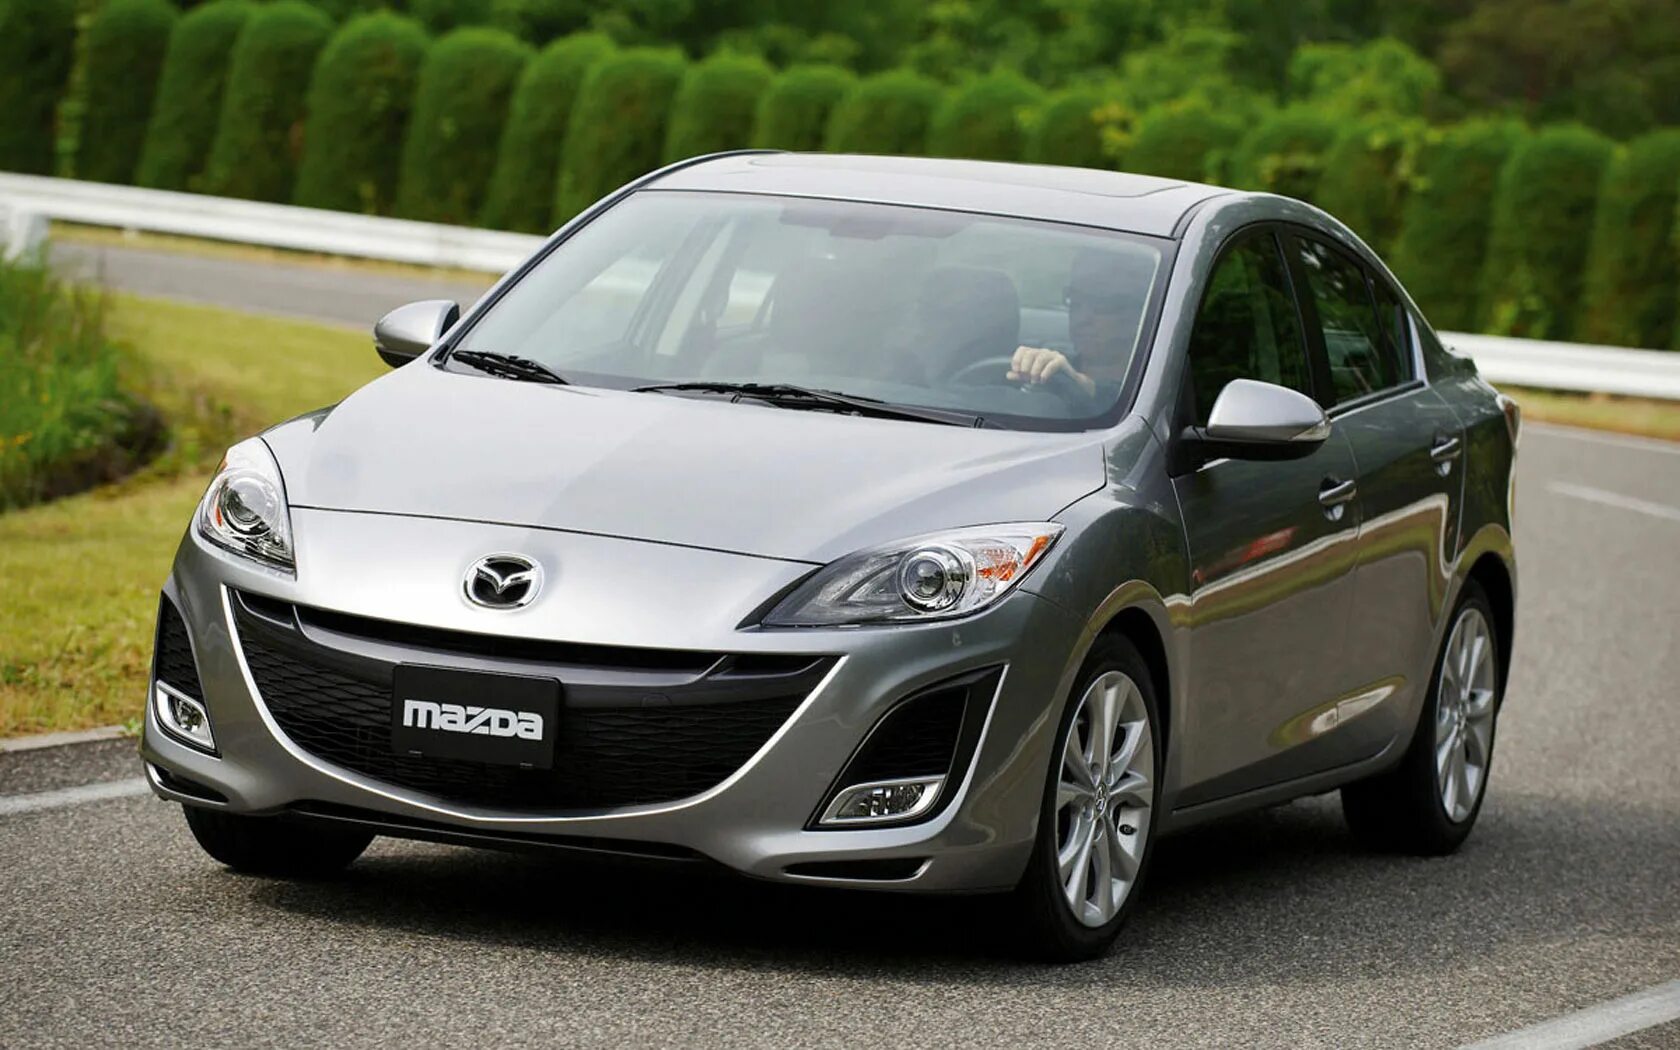 Mazda 3 2010. Mazda 3 BL 2010. Мазда 3 седан 2010. Мазда 3 2 поколение седан. Мазда 3 л с